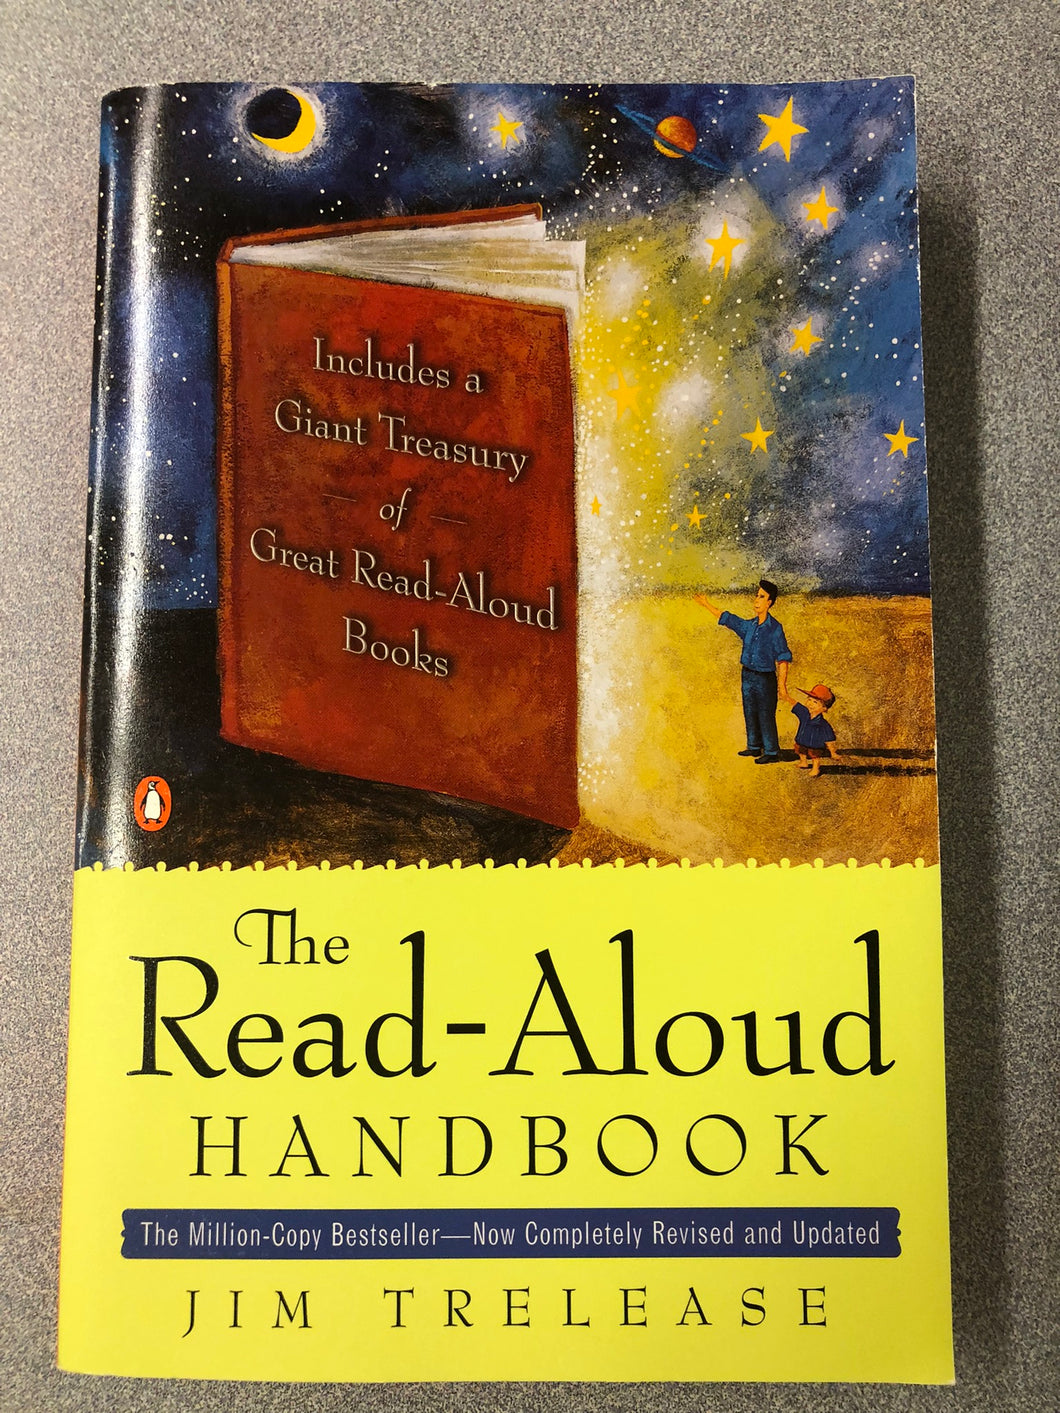 The Read-Aloud Handbook, 5th Edition: Includes a Giant Treasury of Great Read-Aloud Books, Trelease, Jim [2001] EM 7/22